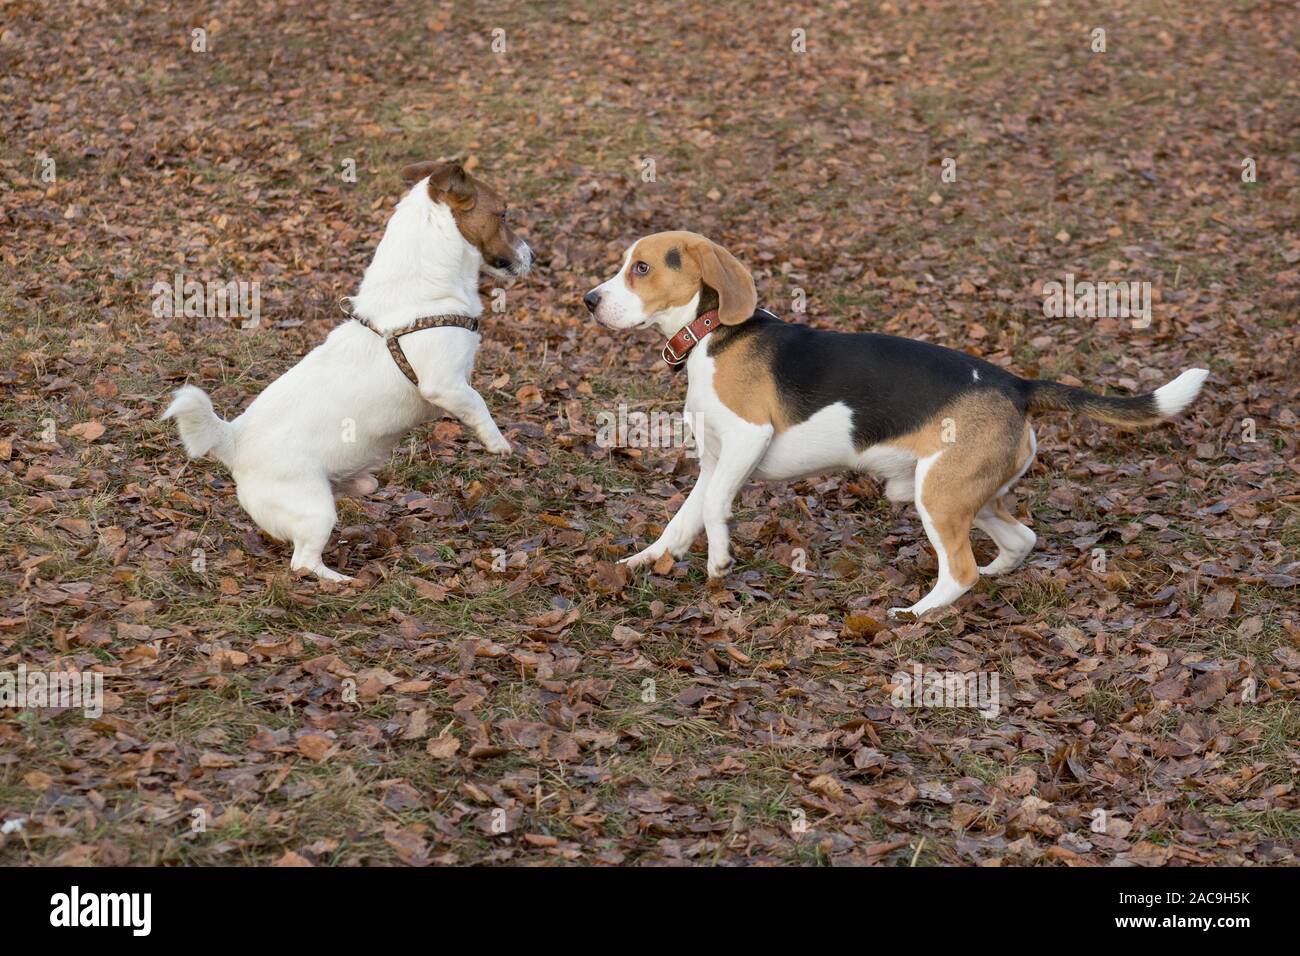 jack russell beagle